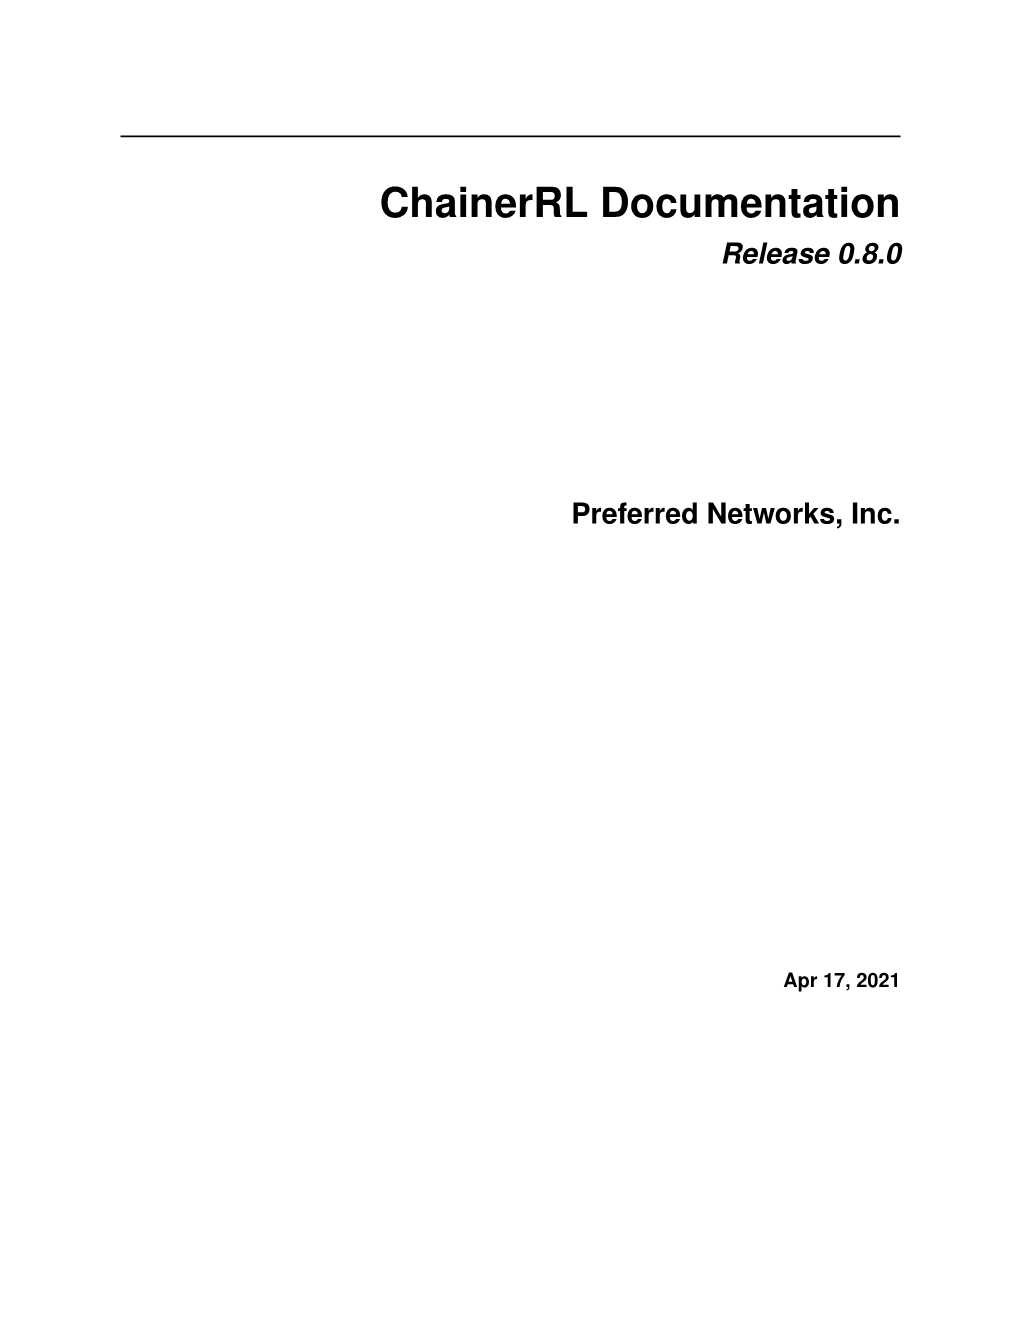 Chainerrl Documentation Release 0.8.0